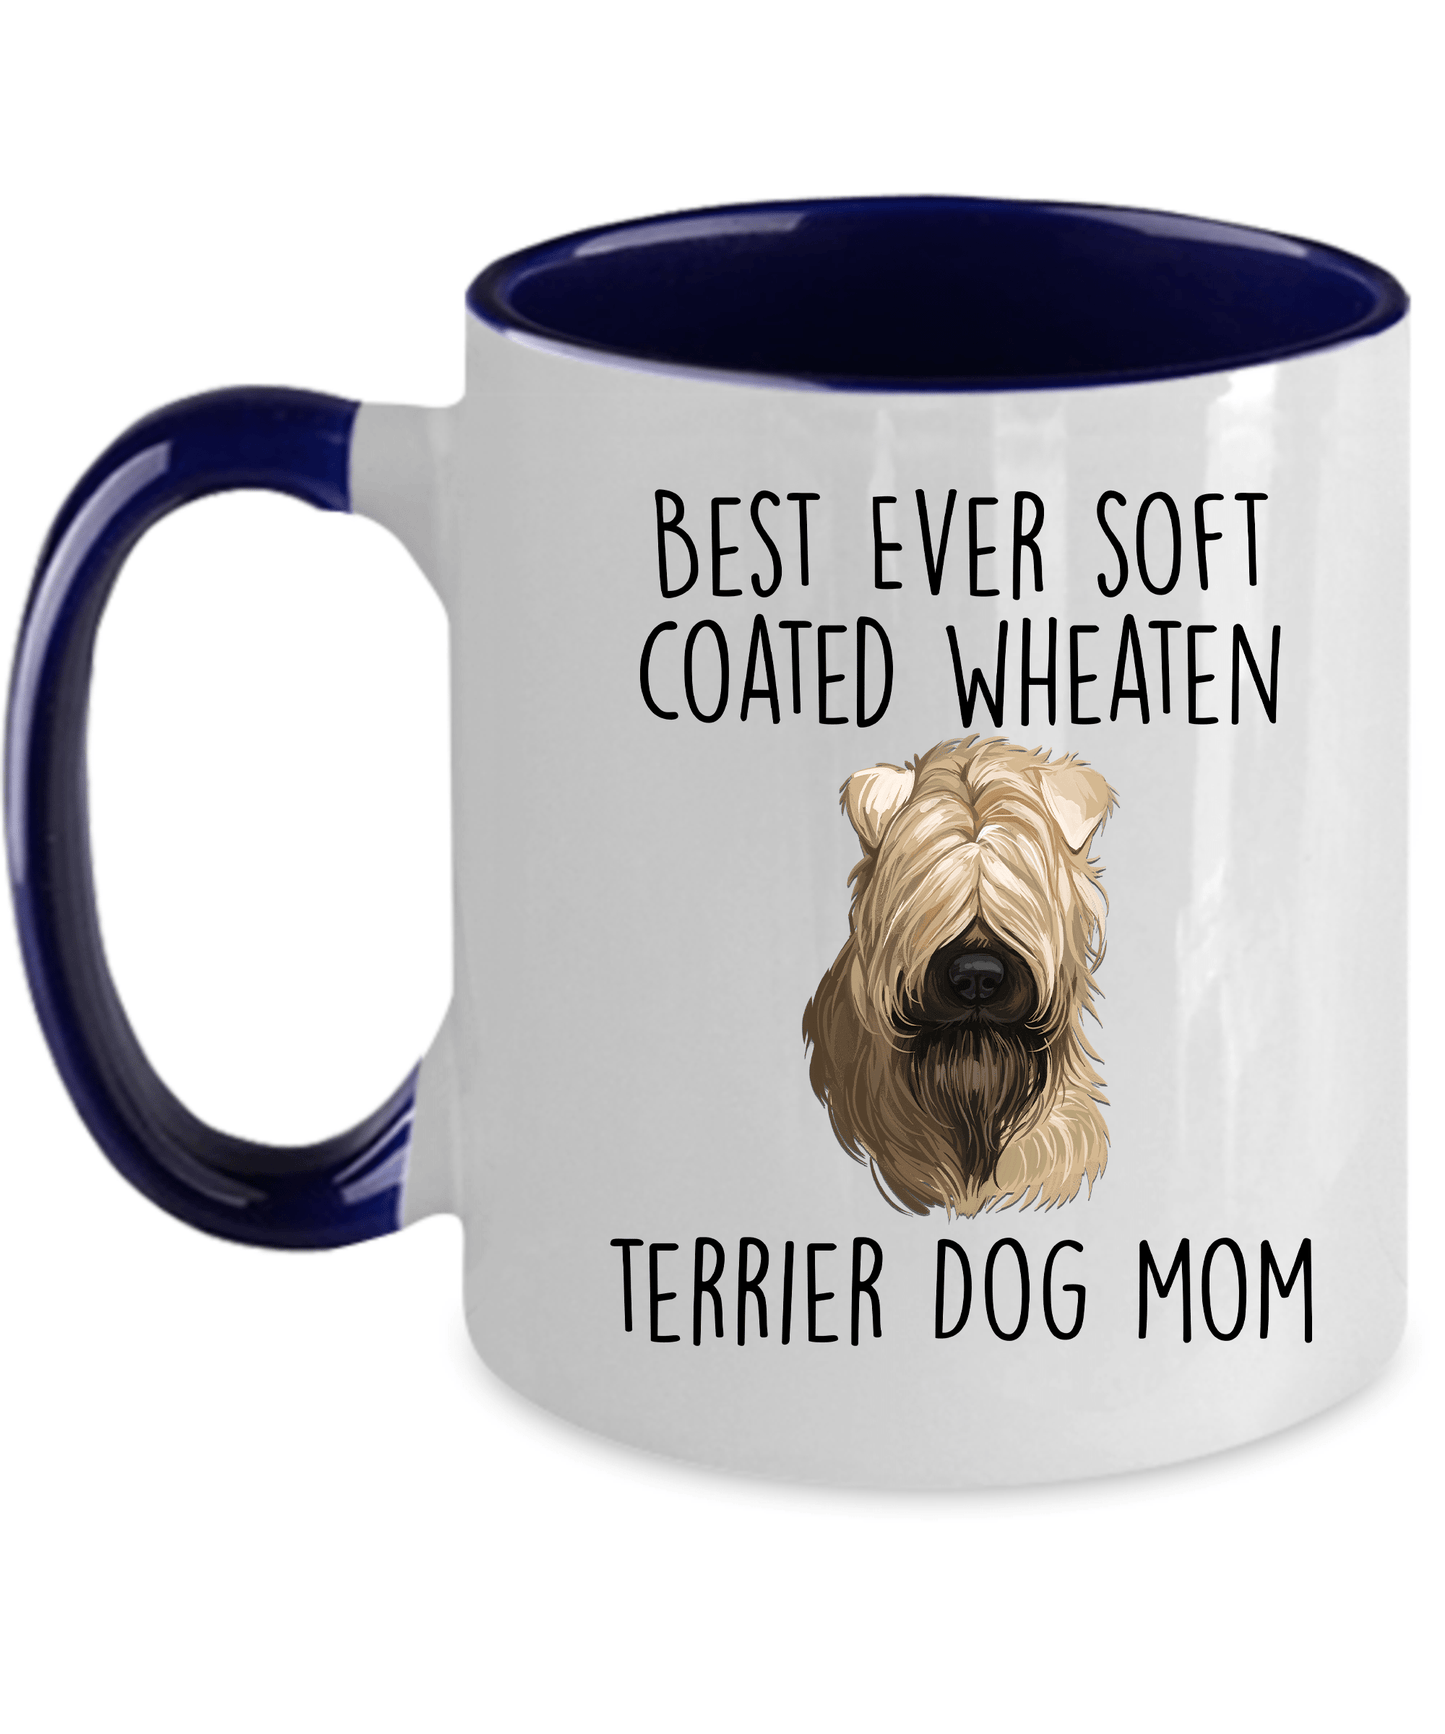 Best Ever Soft Coated Wheaten Terrier Dog Mom Ceramic Coffee Mug